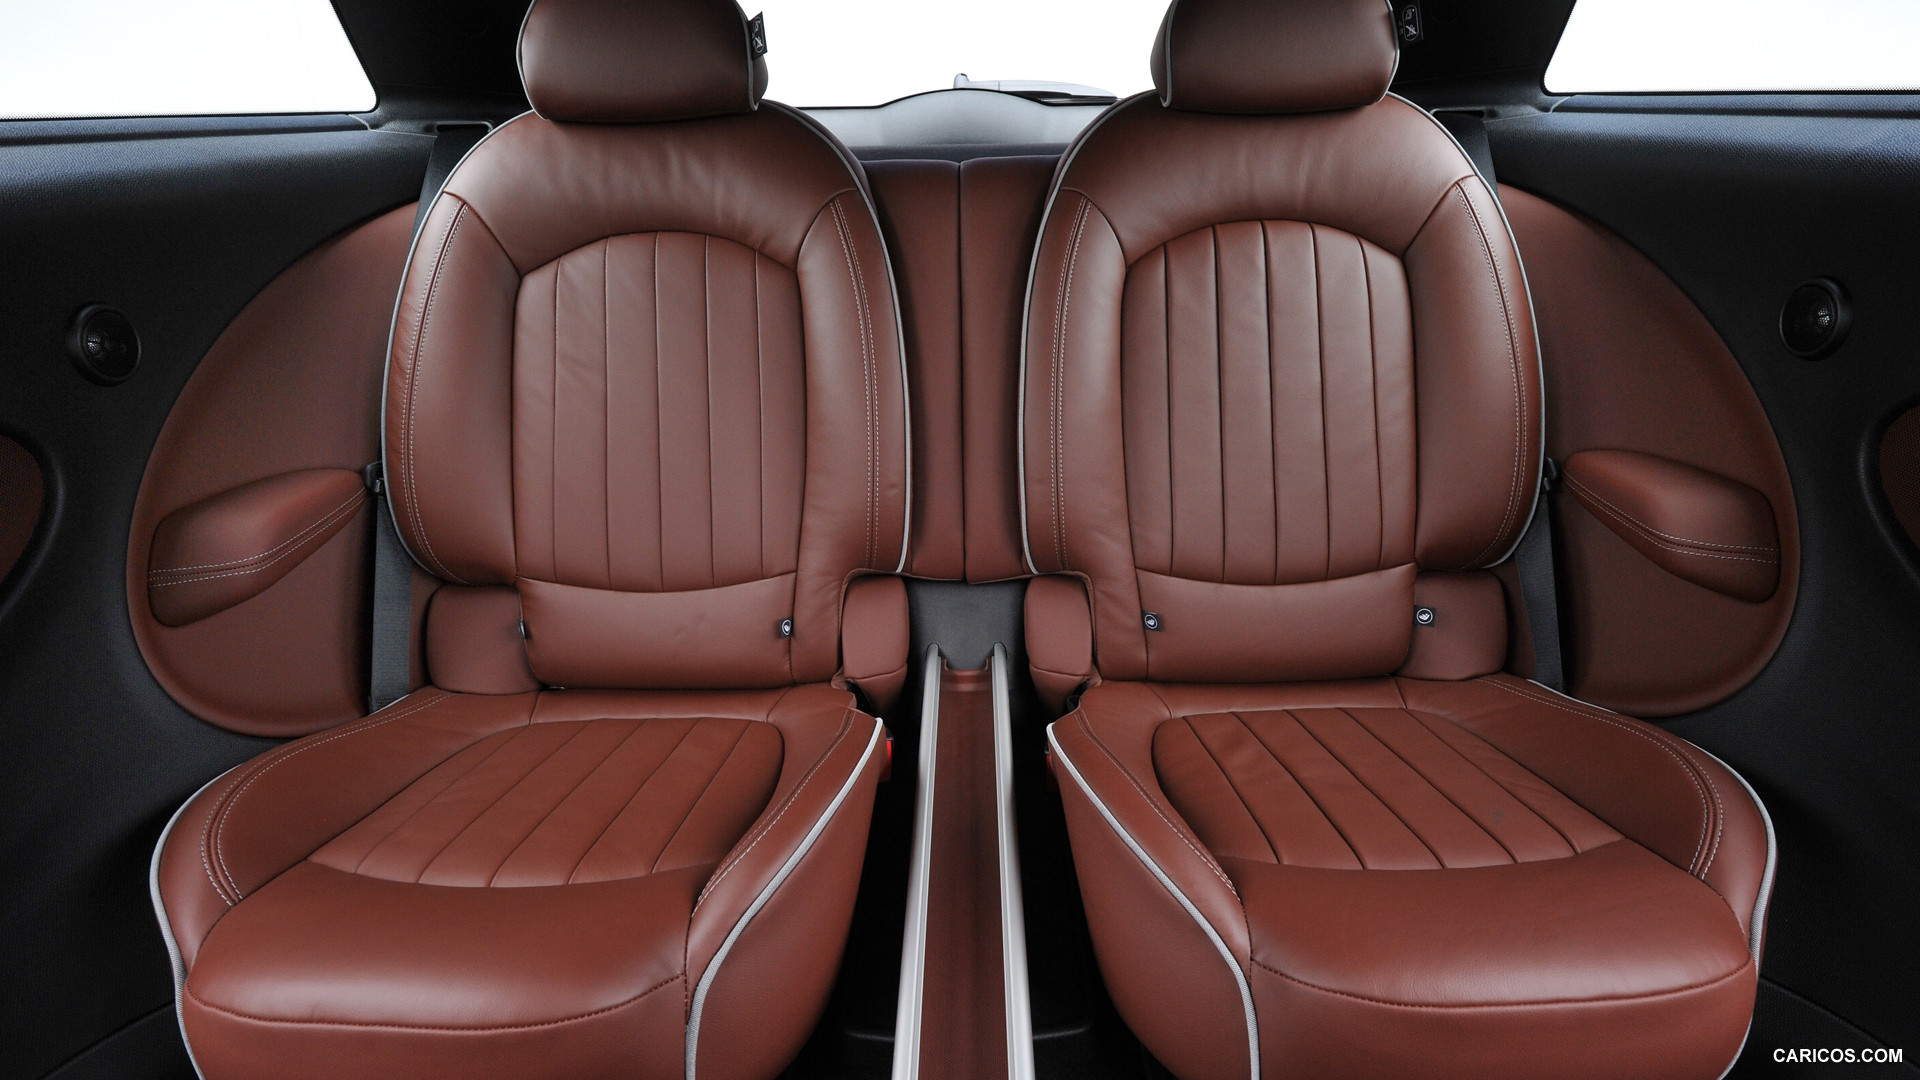 2013 MINI Cooper S Paceman  - Interior Rear Seats, #426 of 438